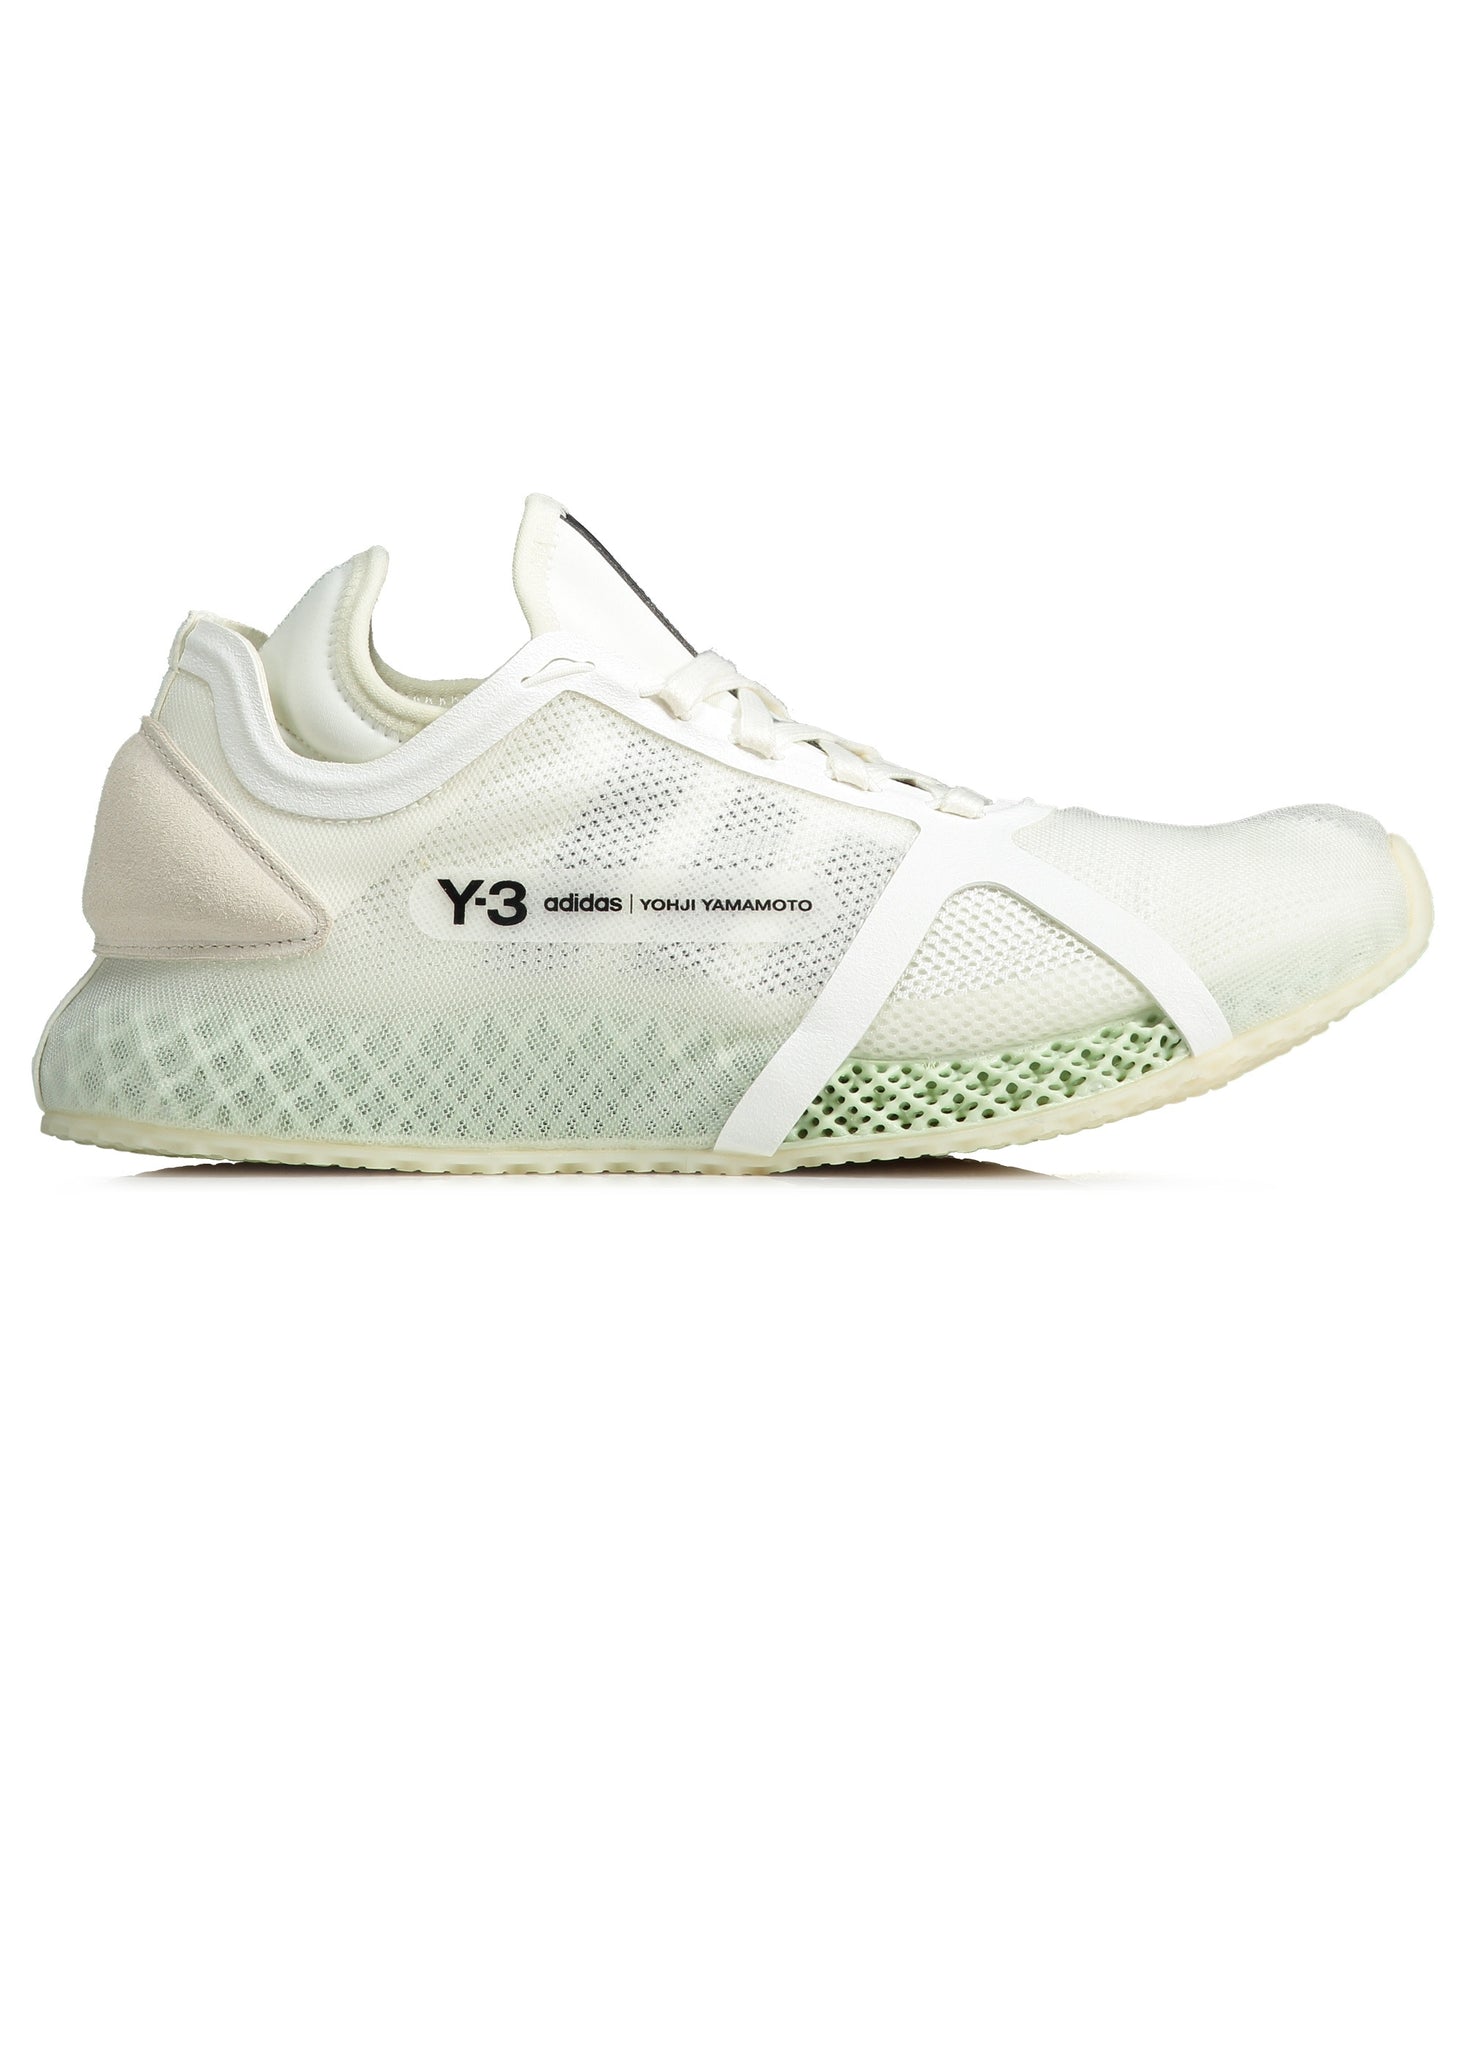 Y3 Runner 4D IOW - White /Green